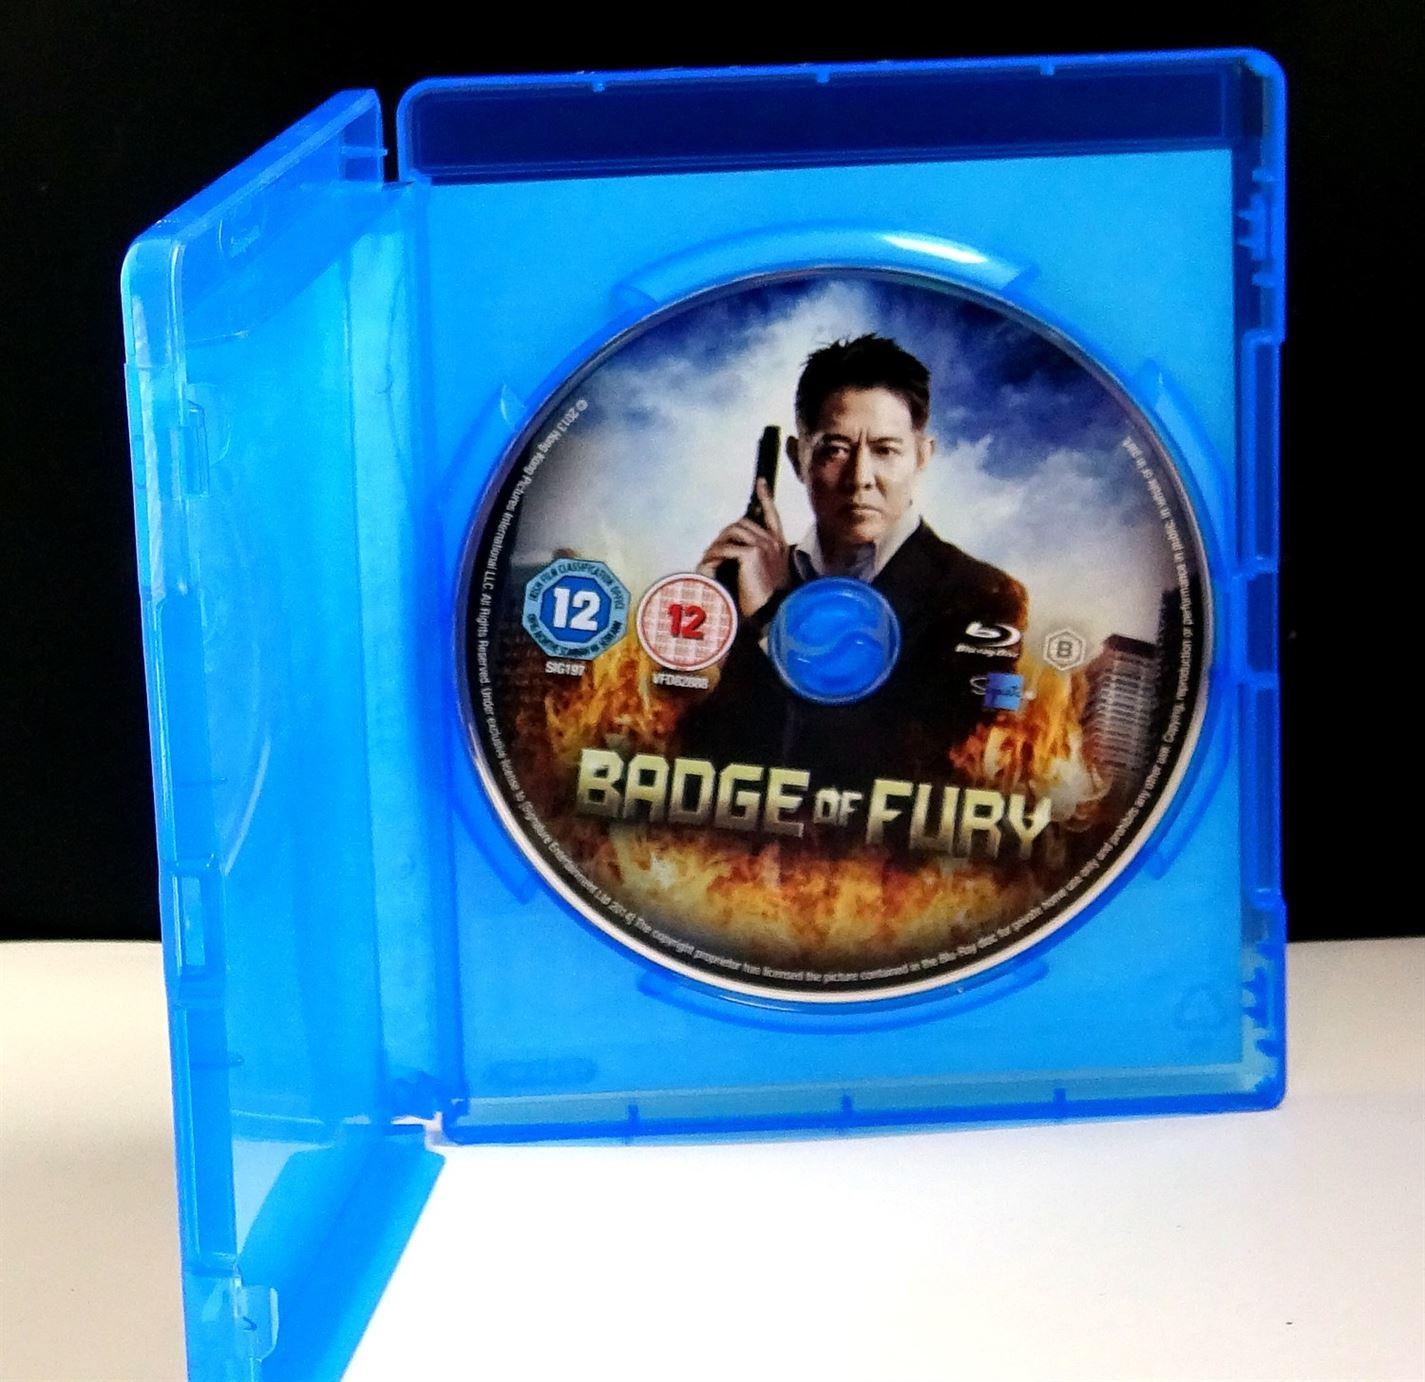 Badge of Fury (Blu-ray) - UK Seller